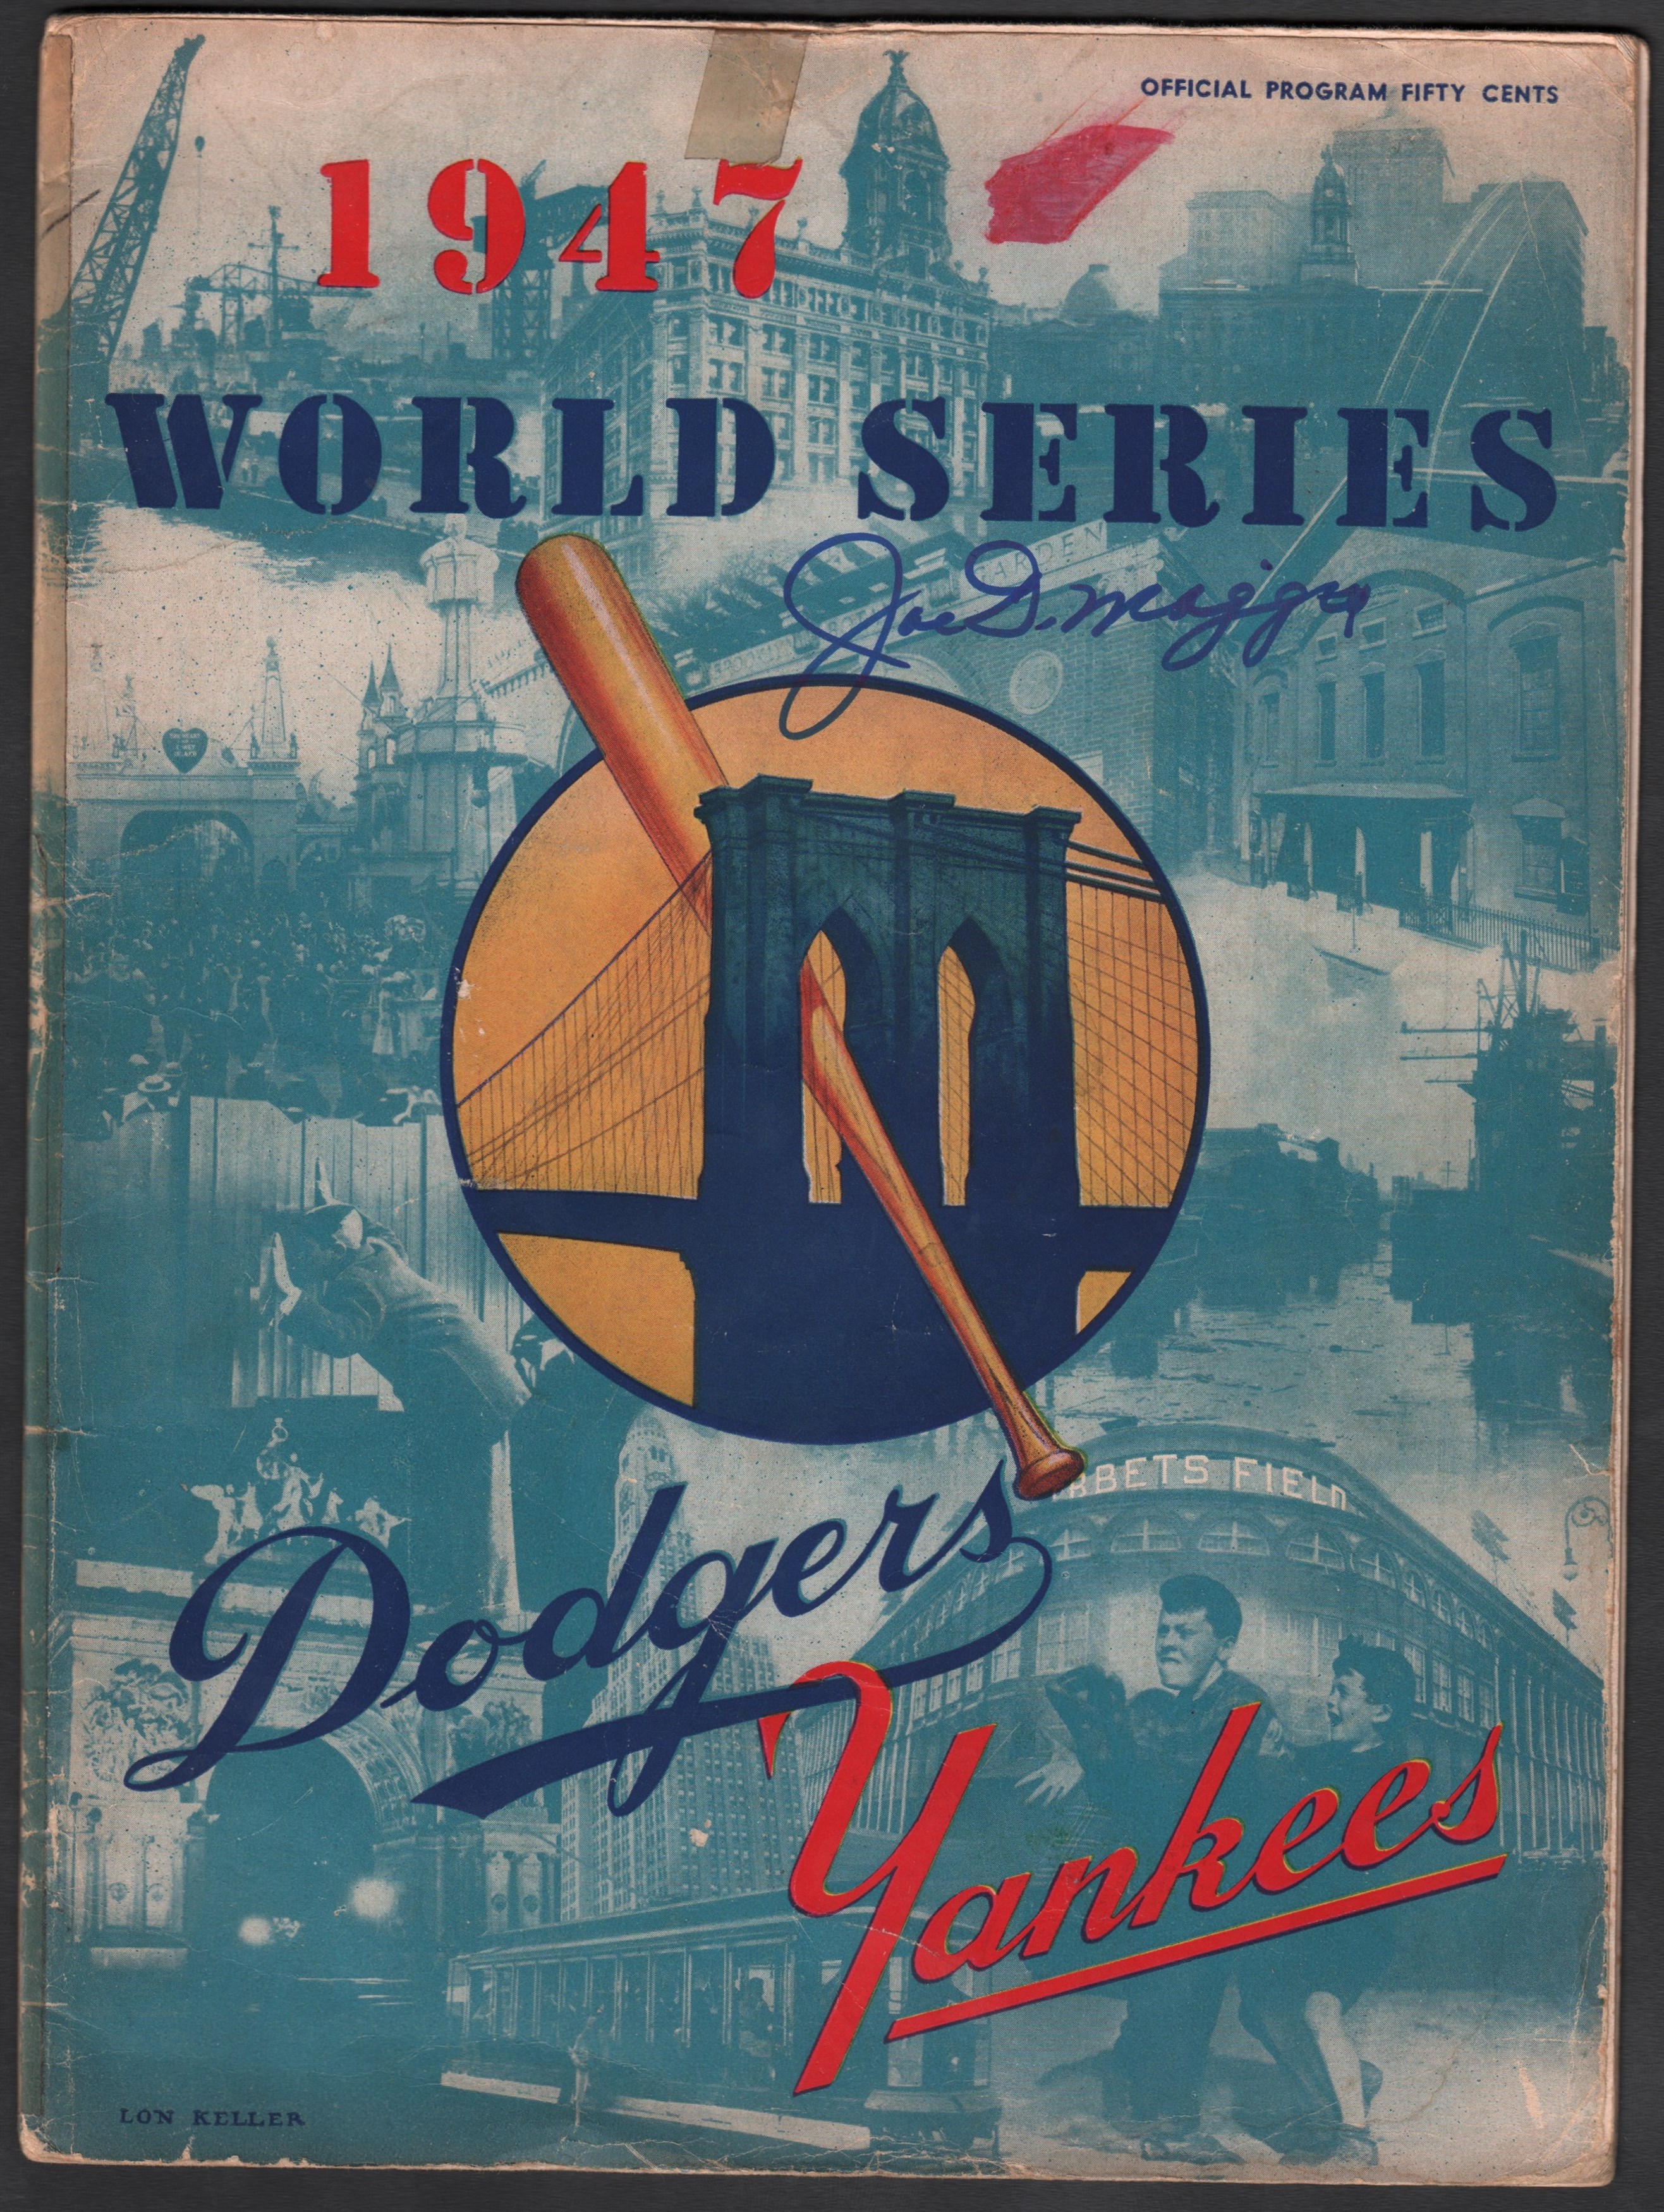 Baseball Autographs - Bill Bevens "No Hitter" Game 1947 World Series Program Signed by Joe DiMaggio